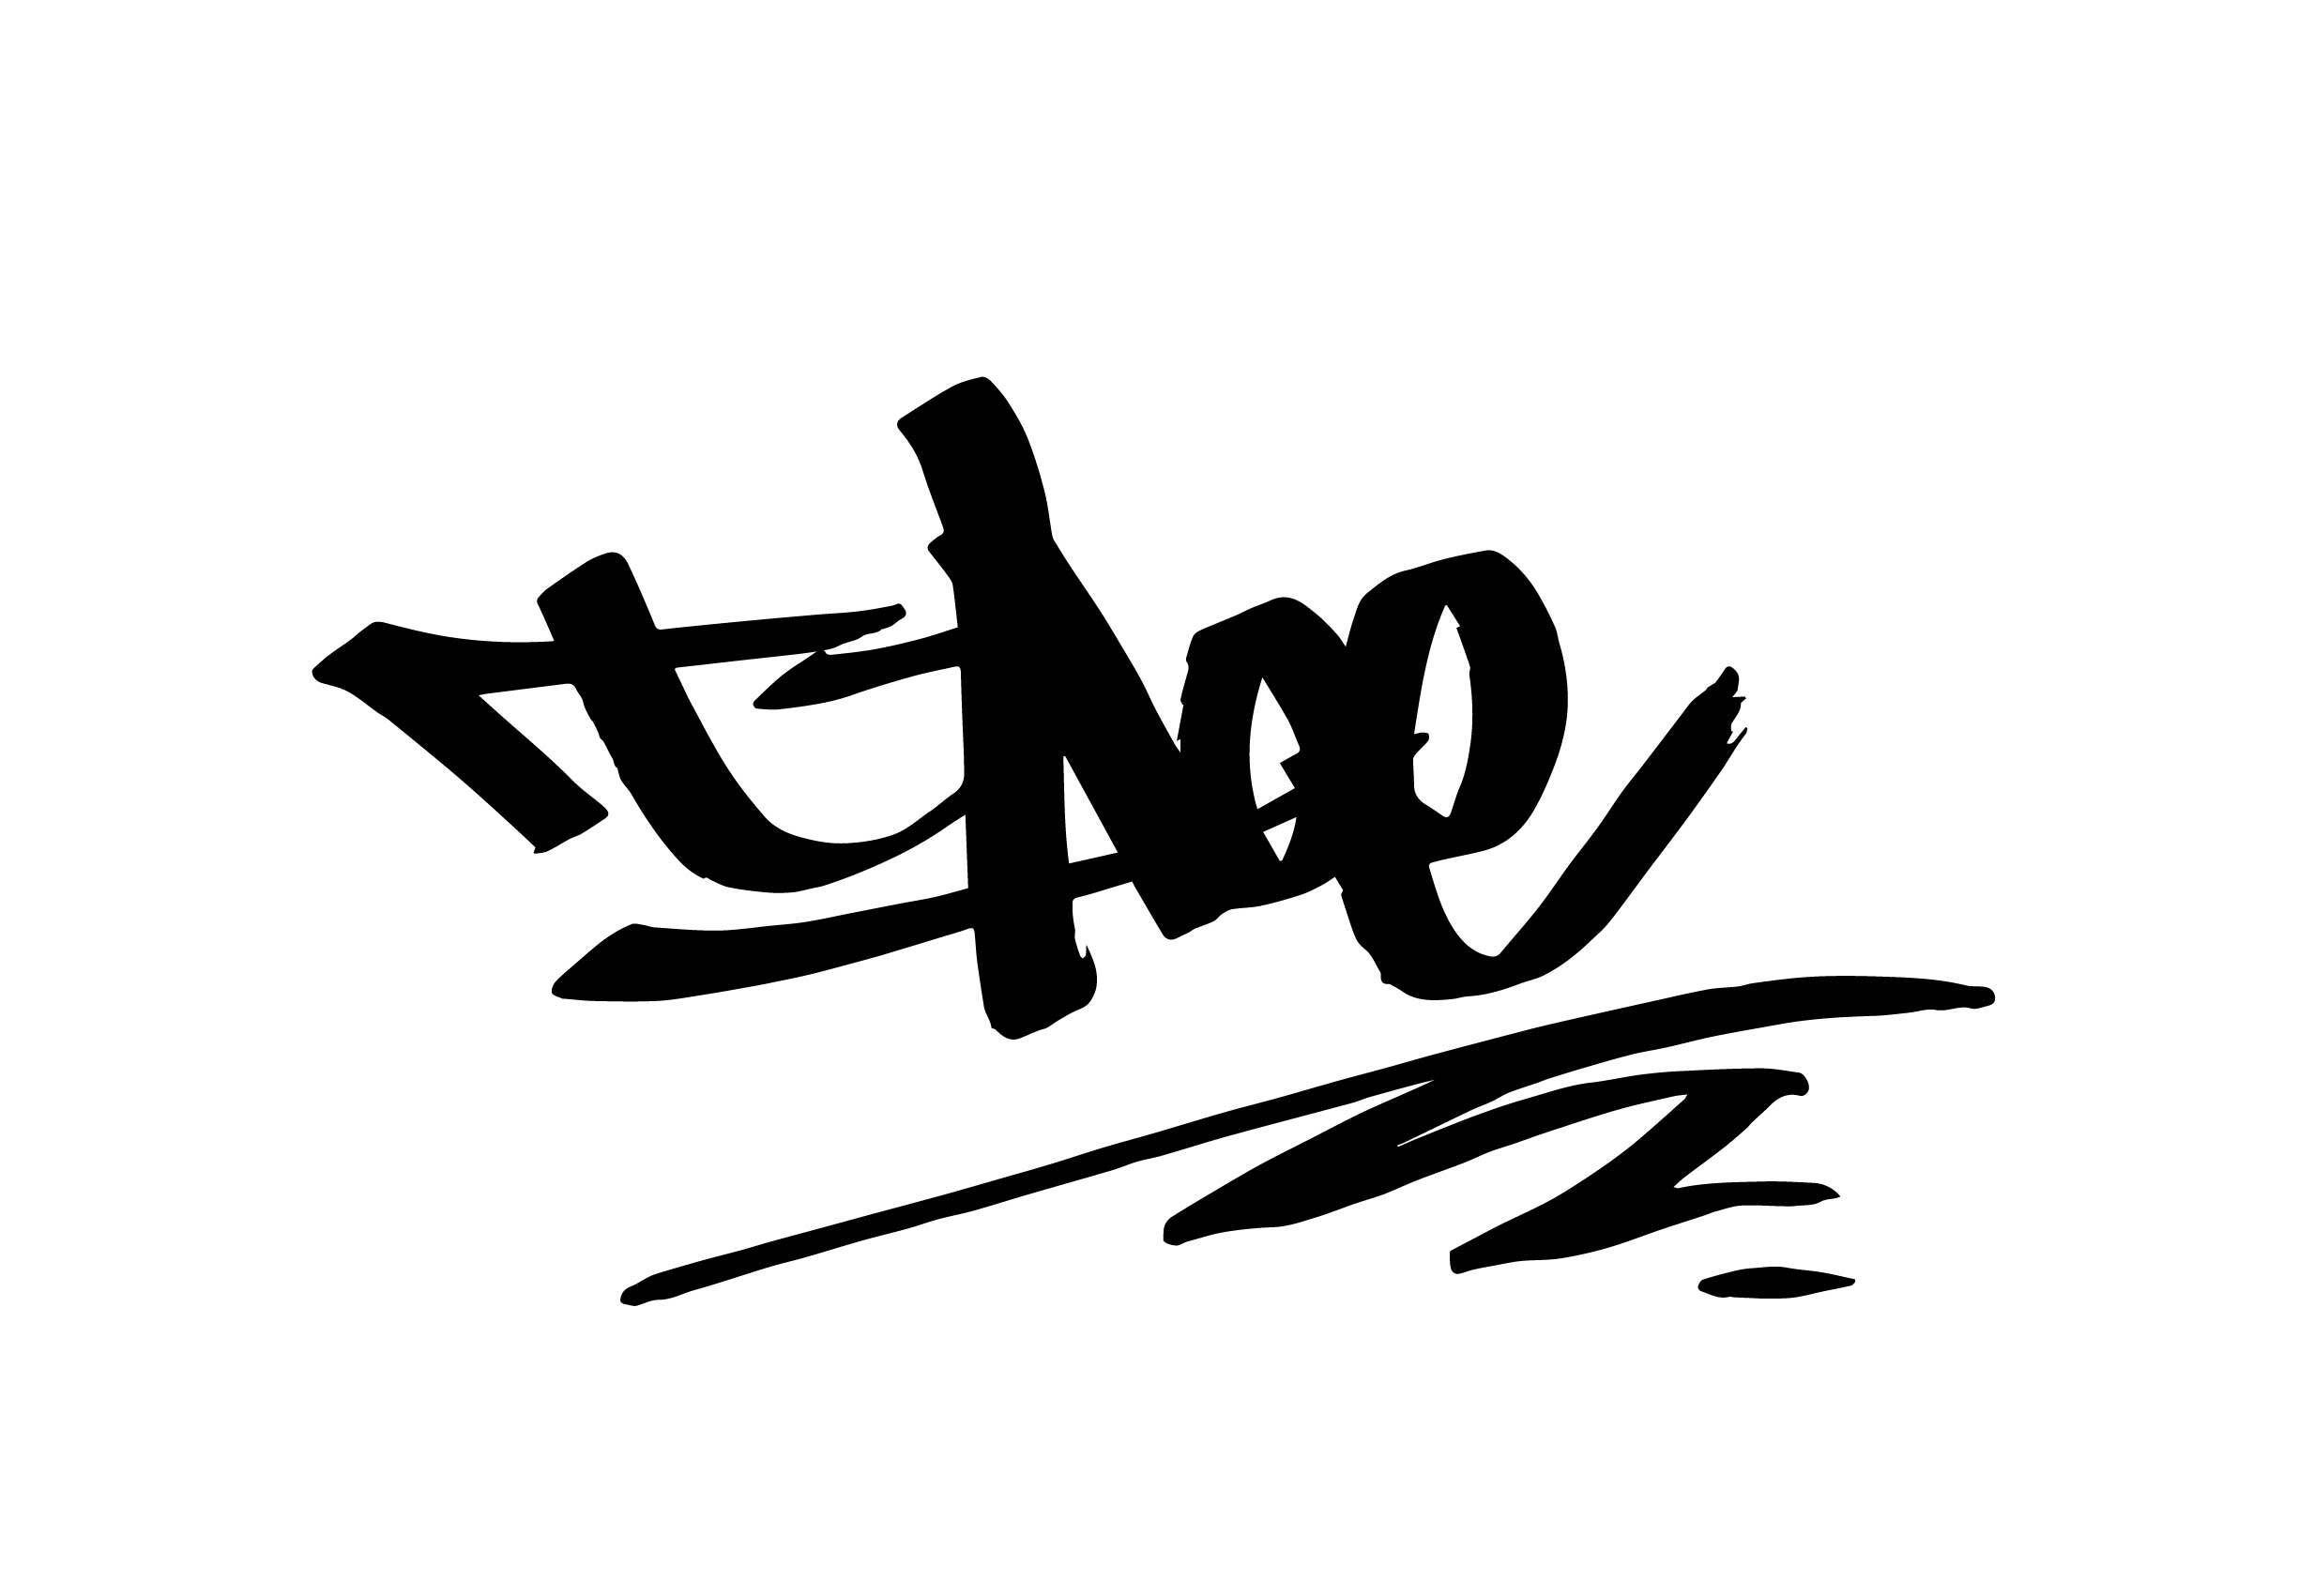 Mv総再生回数5 000万回超え 納税額 億 超えのインディーズアーティスト 最高に クズなrockstar T Ace 10thアルバム Tsubasa 6月5日 水 リリース Kmm Entertainment株式会社のプレスリリース